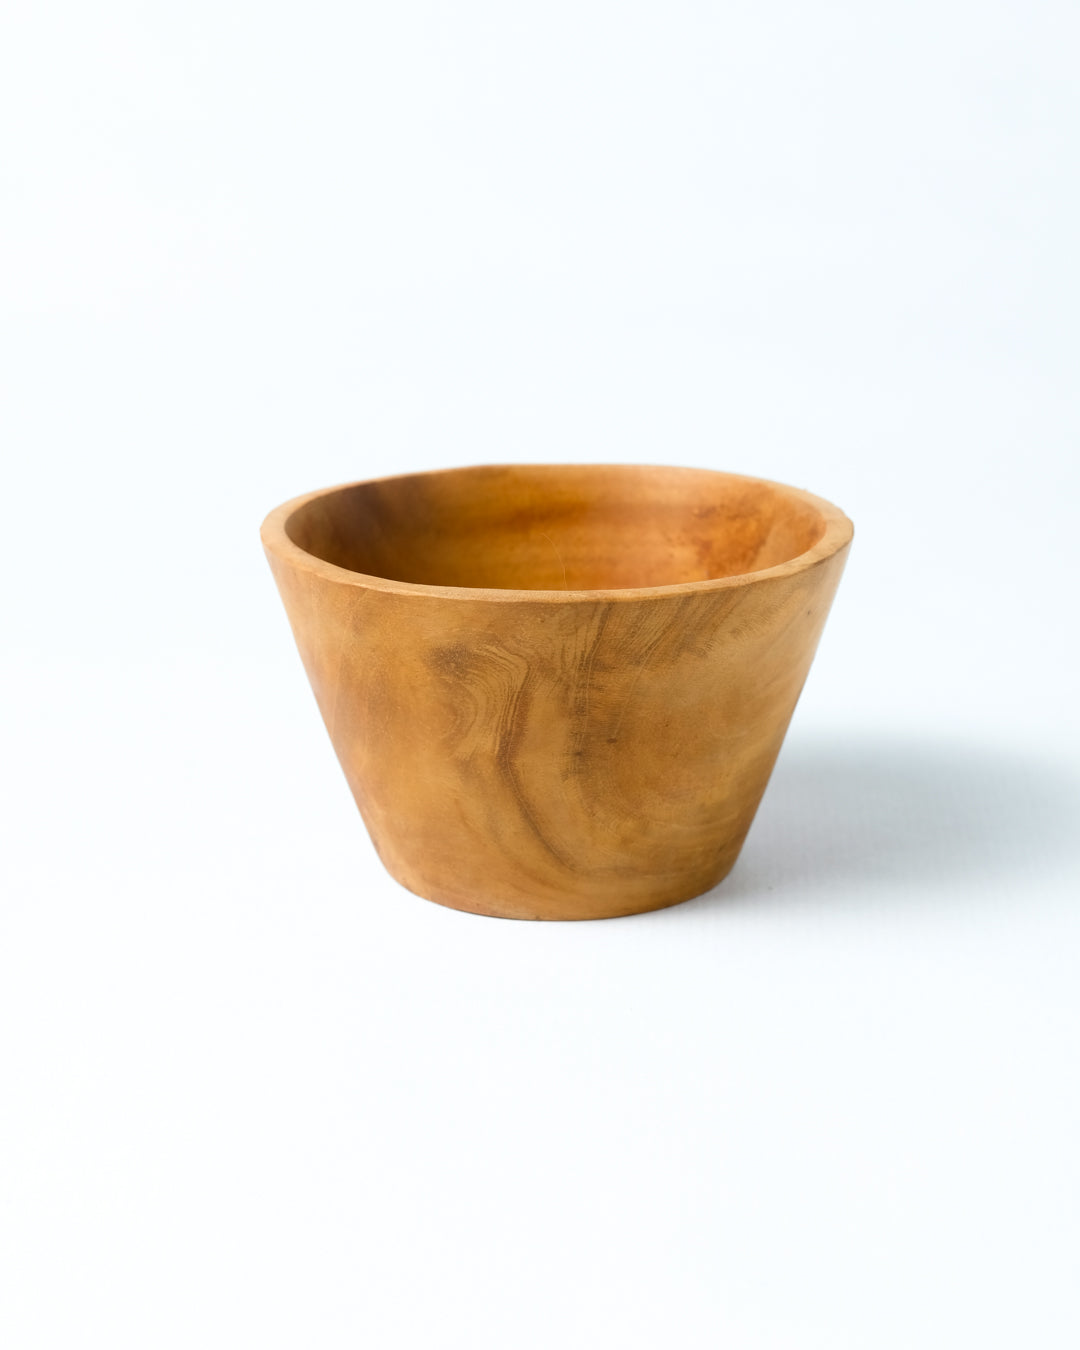 Bowl de madera maciza de teca natural Bandowoso, forma cónica, acabado natural,  hecho a mano, 2 medidas, hecho en Indonesia